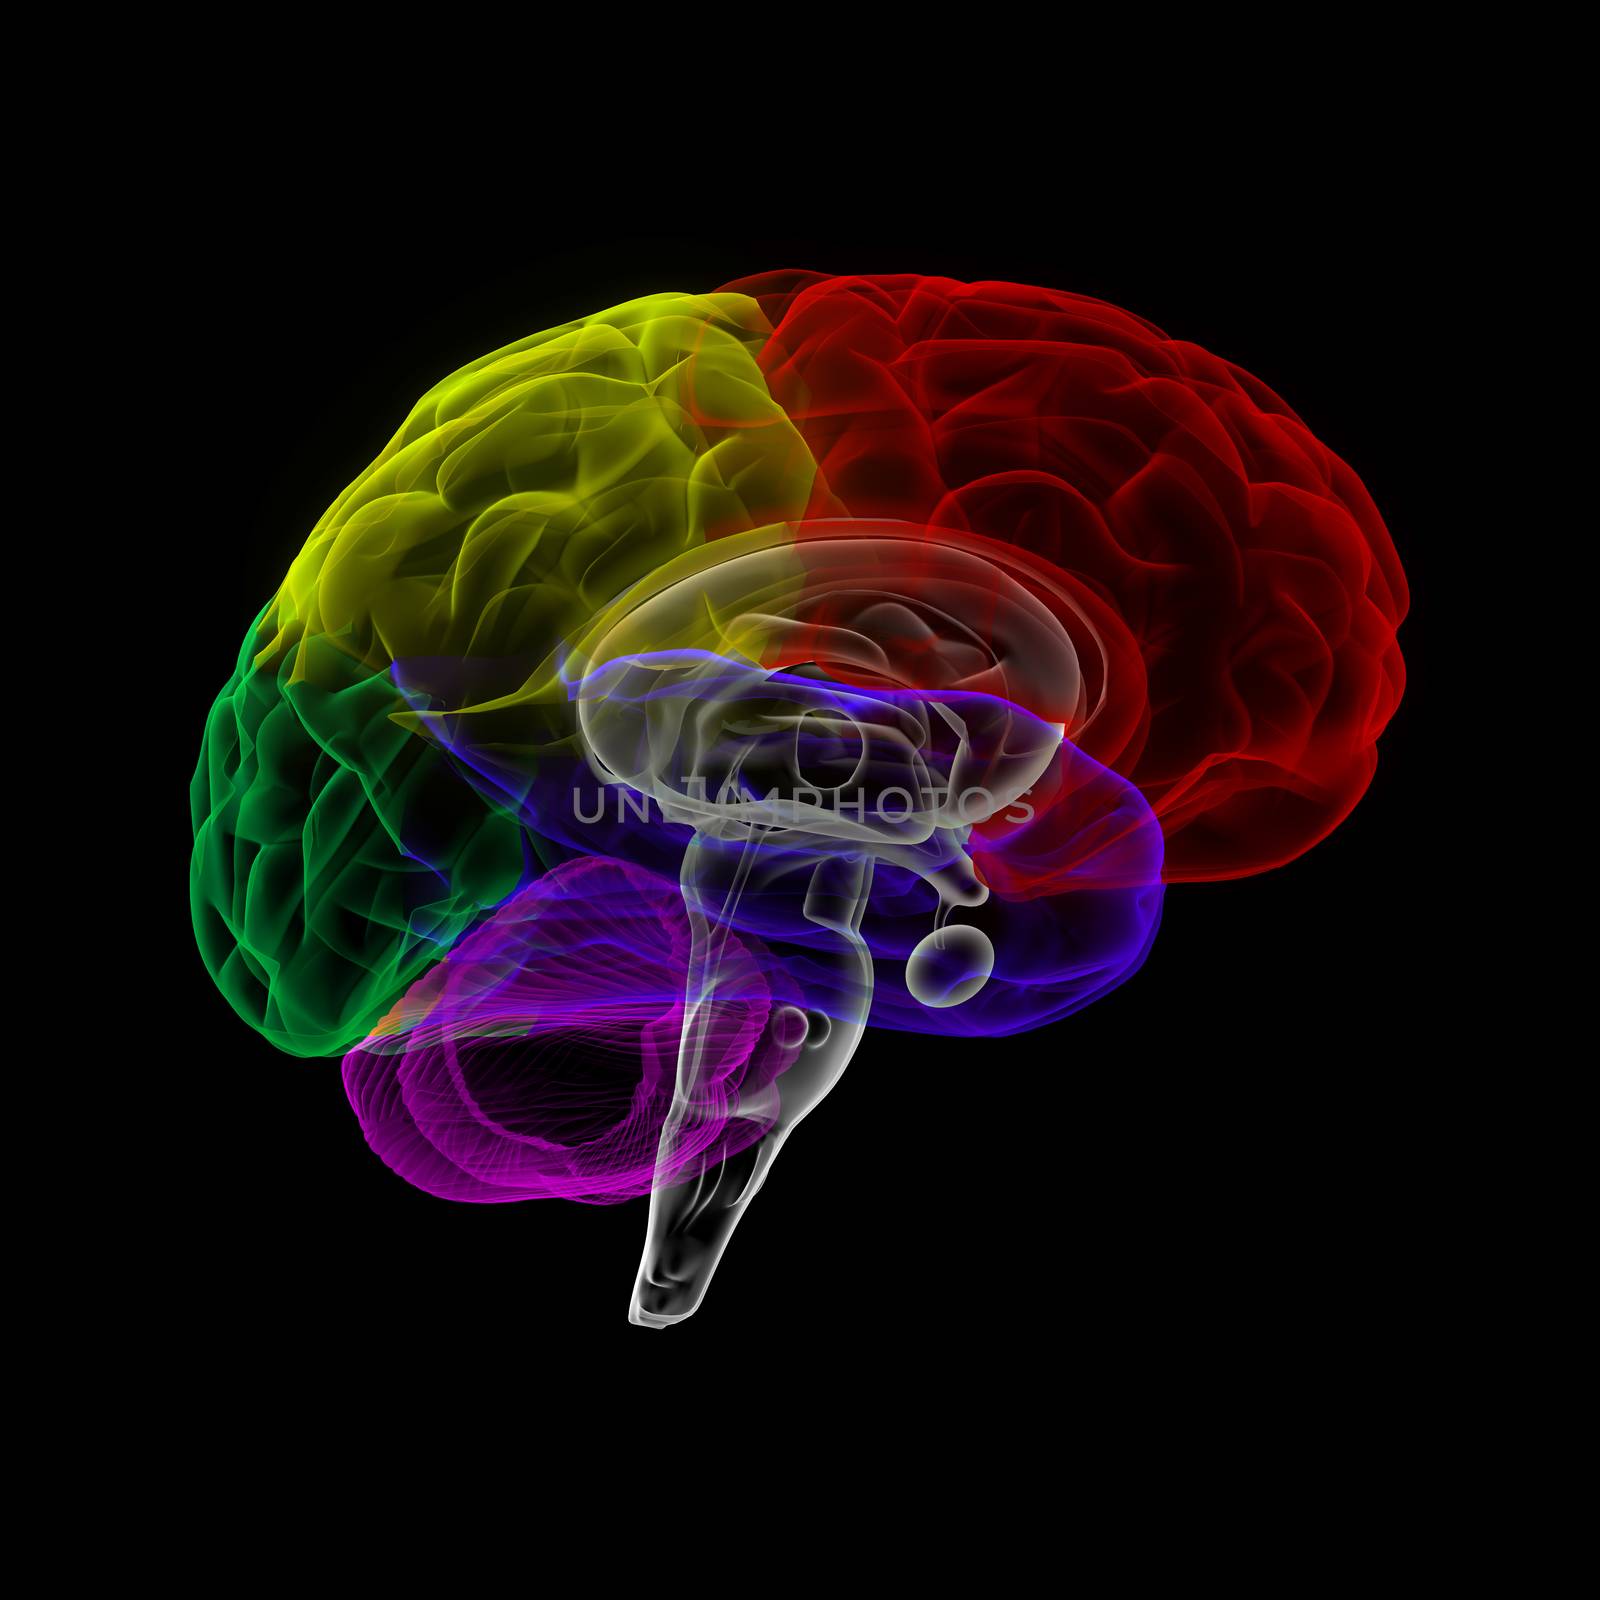 Human brain in x-ray view